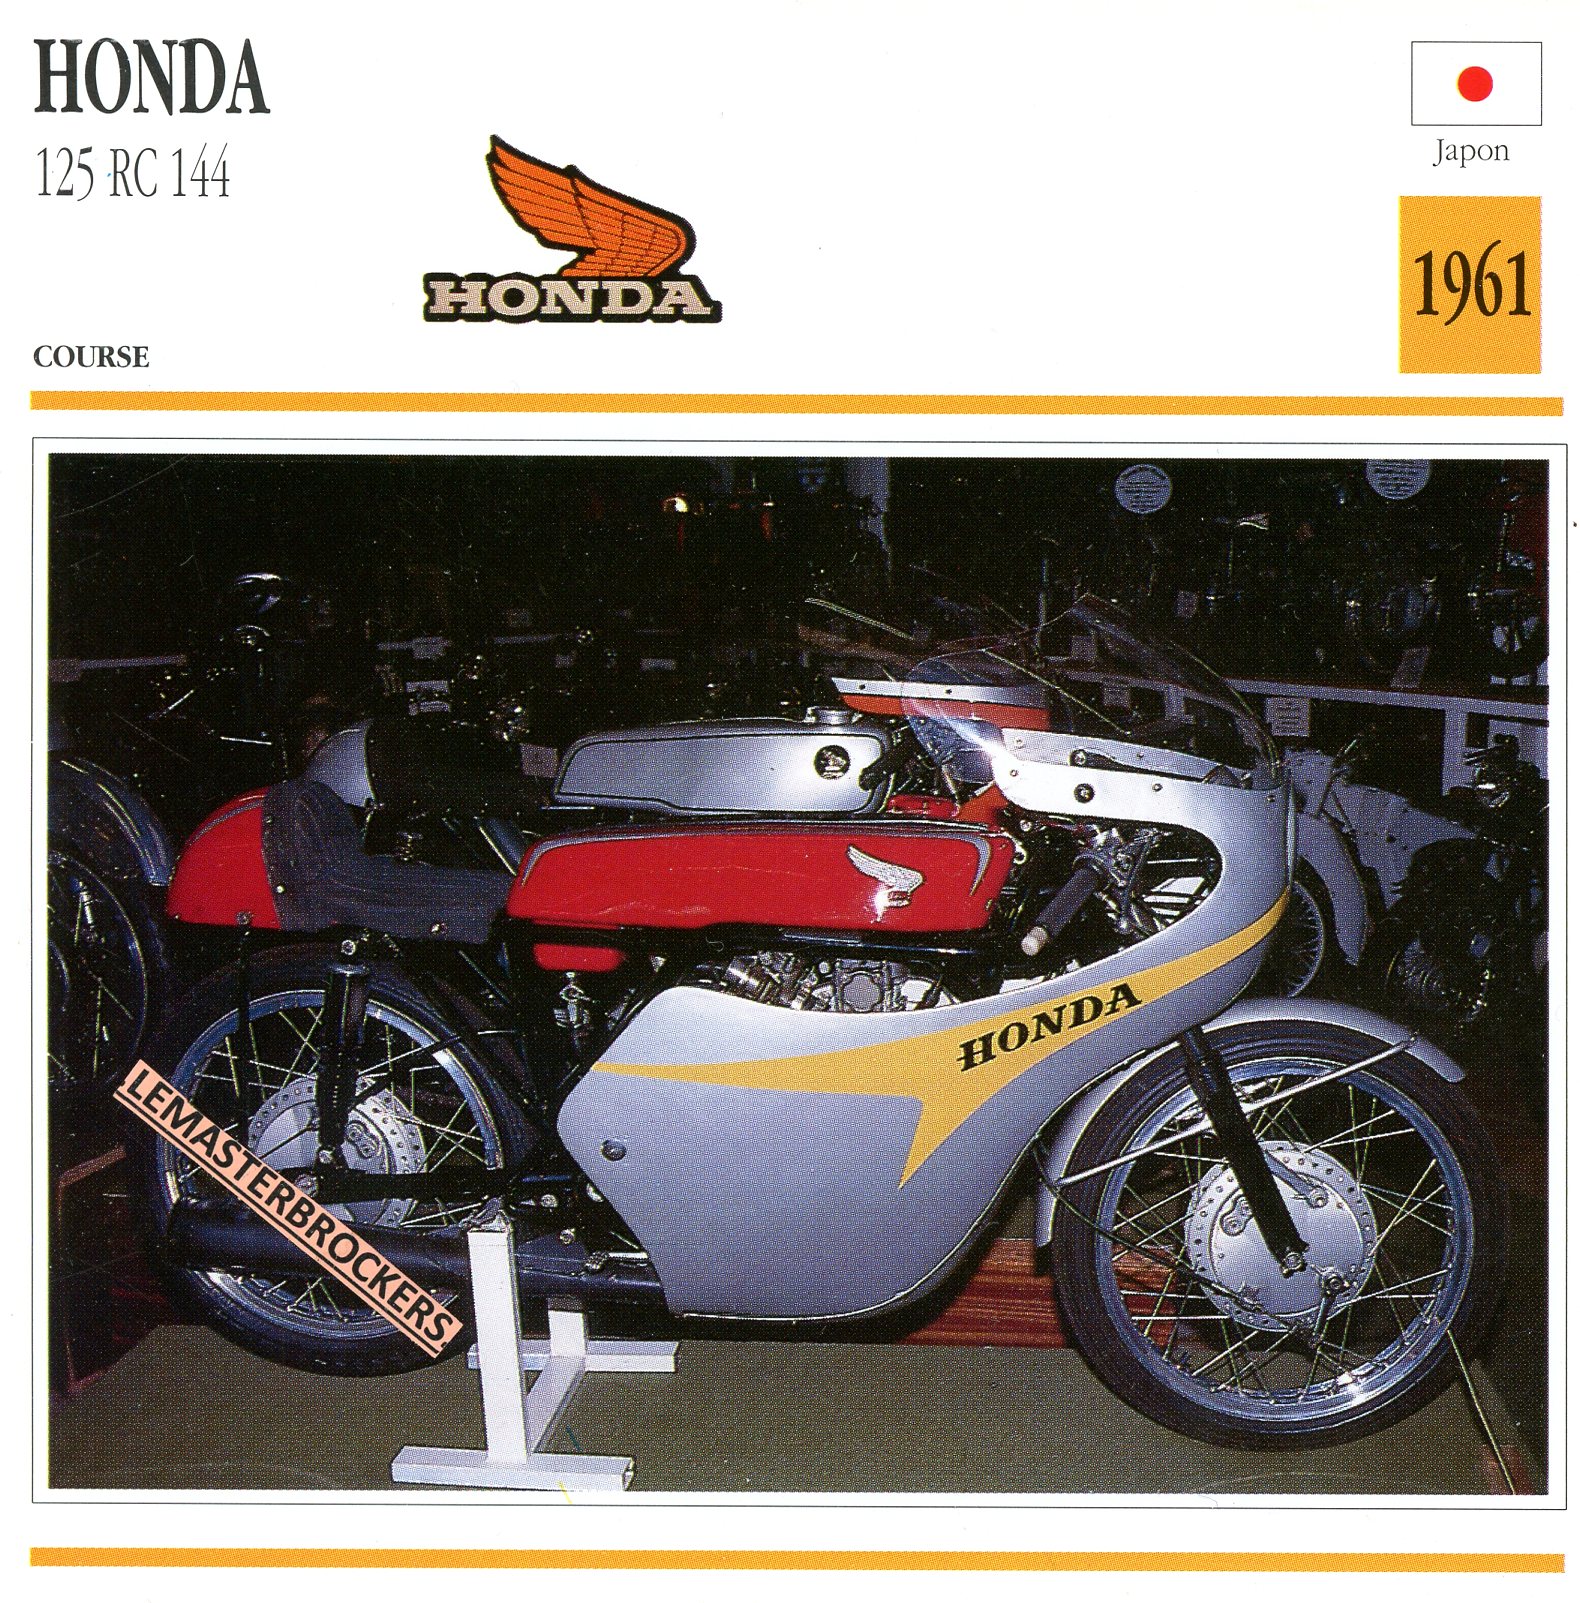 FICHE-MOTO-HONDA-125-RC144-1961-LEMASTERBROCKERS-CARS-MOTORCYCLE